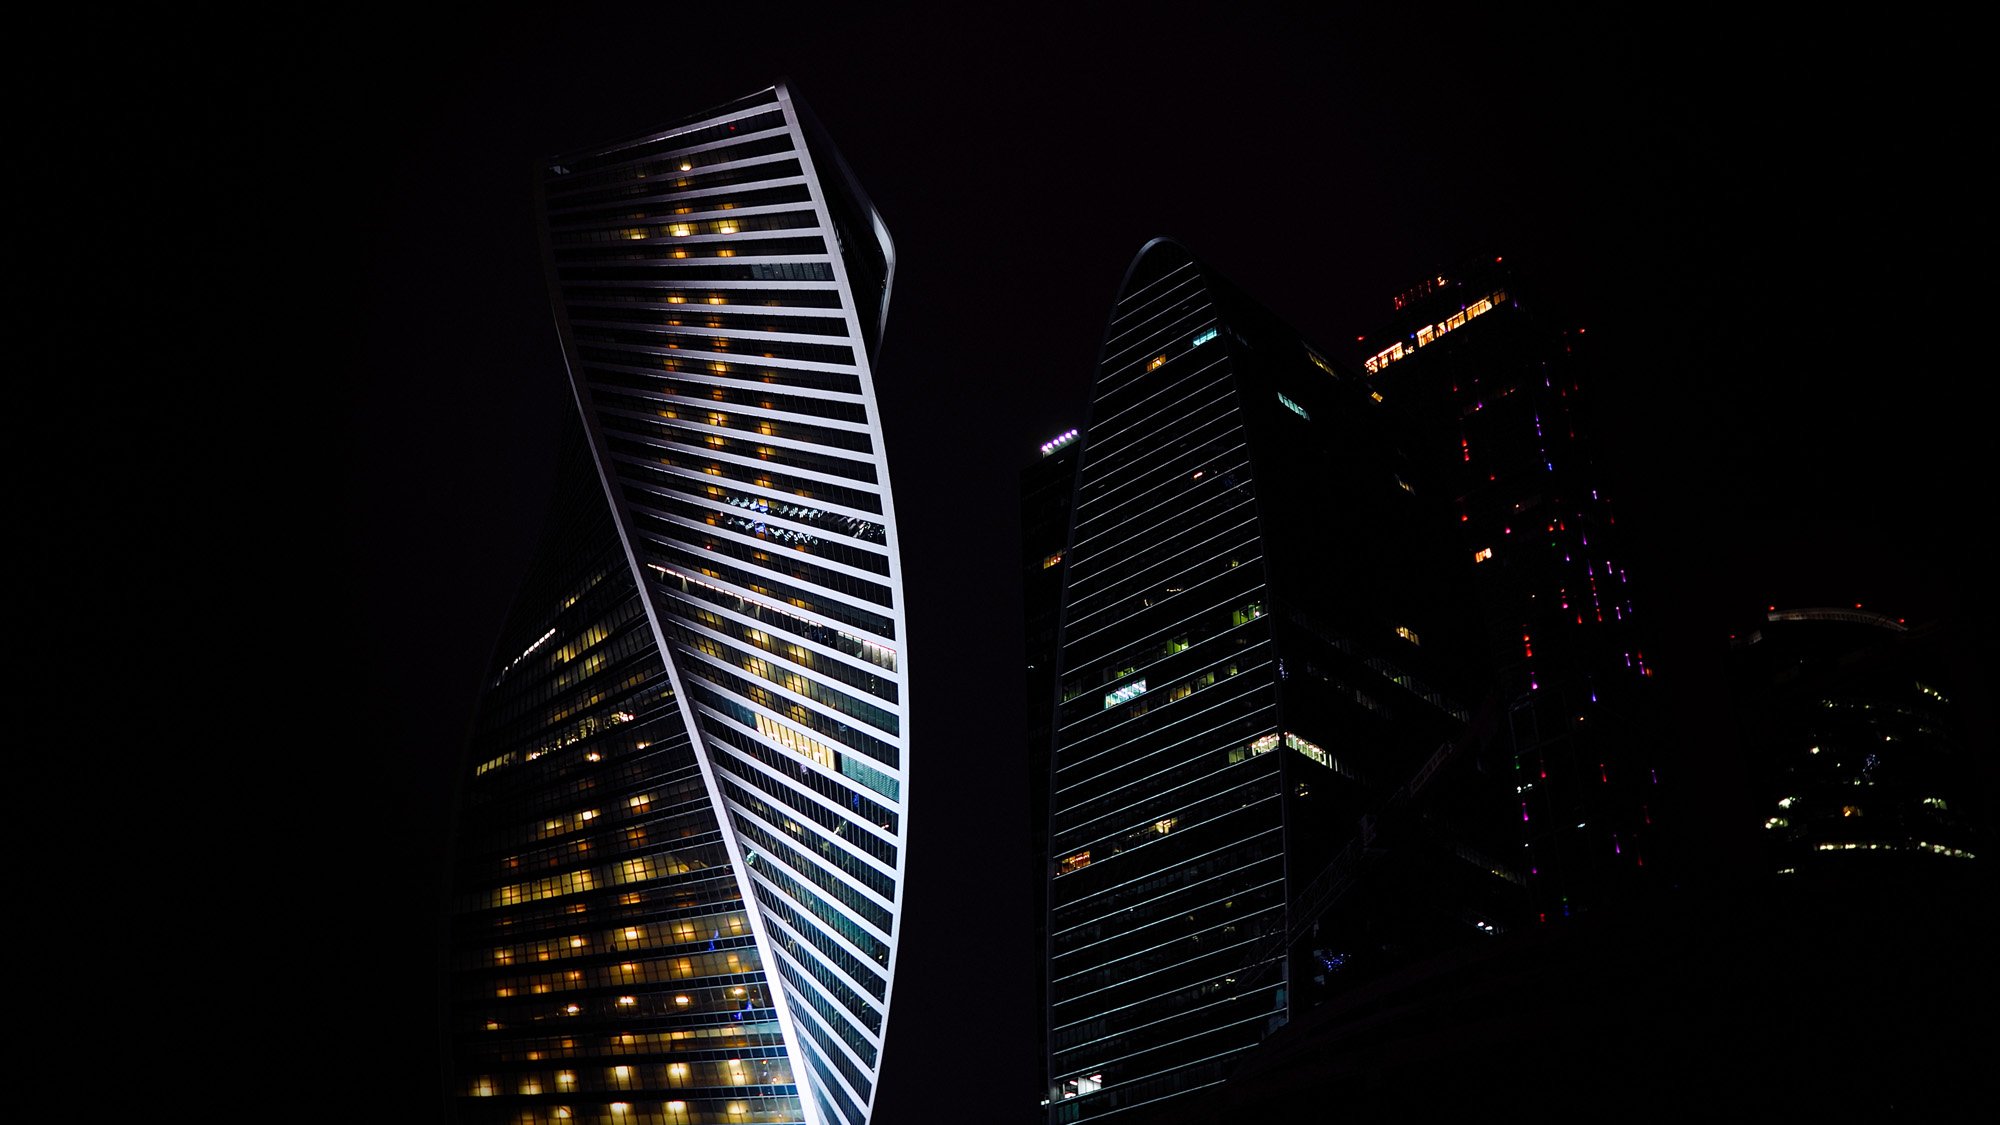 Night view of the building. Credit: Pavel Fertikh